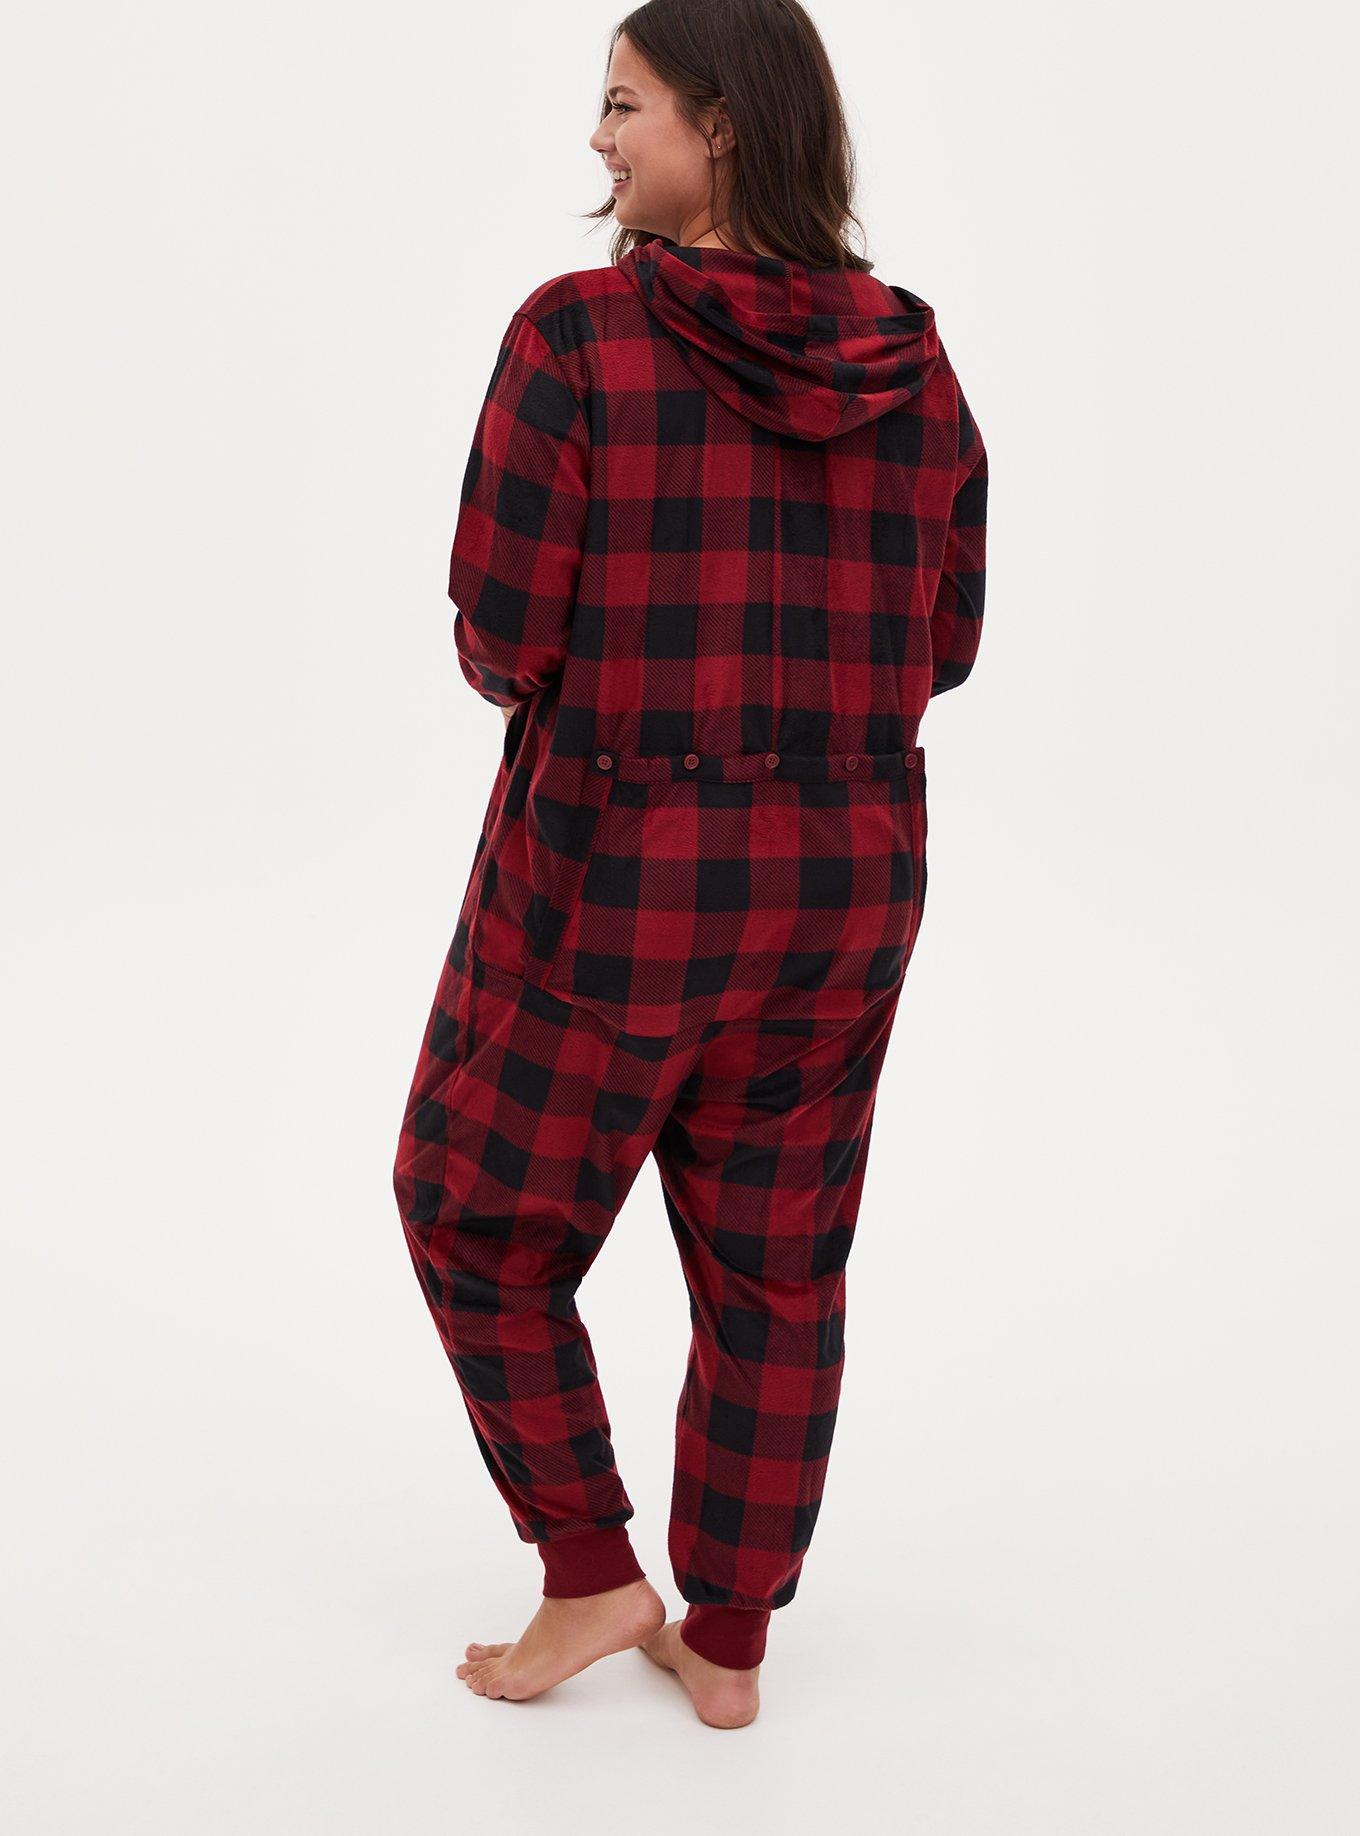 Stretch knit jogger pyjama pants - Buffalo red plaid - Plus Size. Colour:  red. Size: 1xl